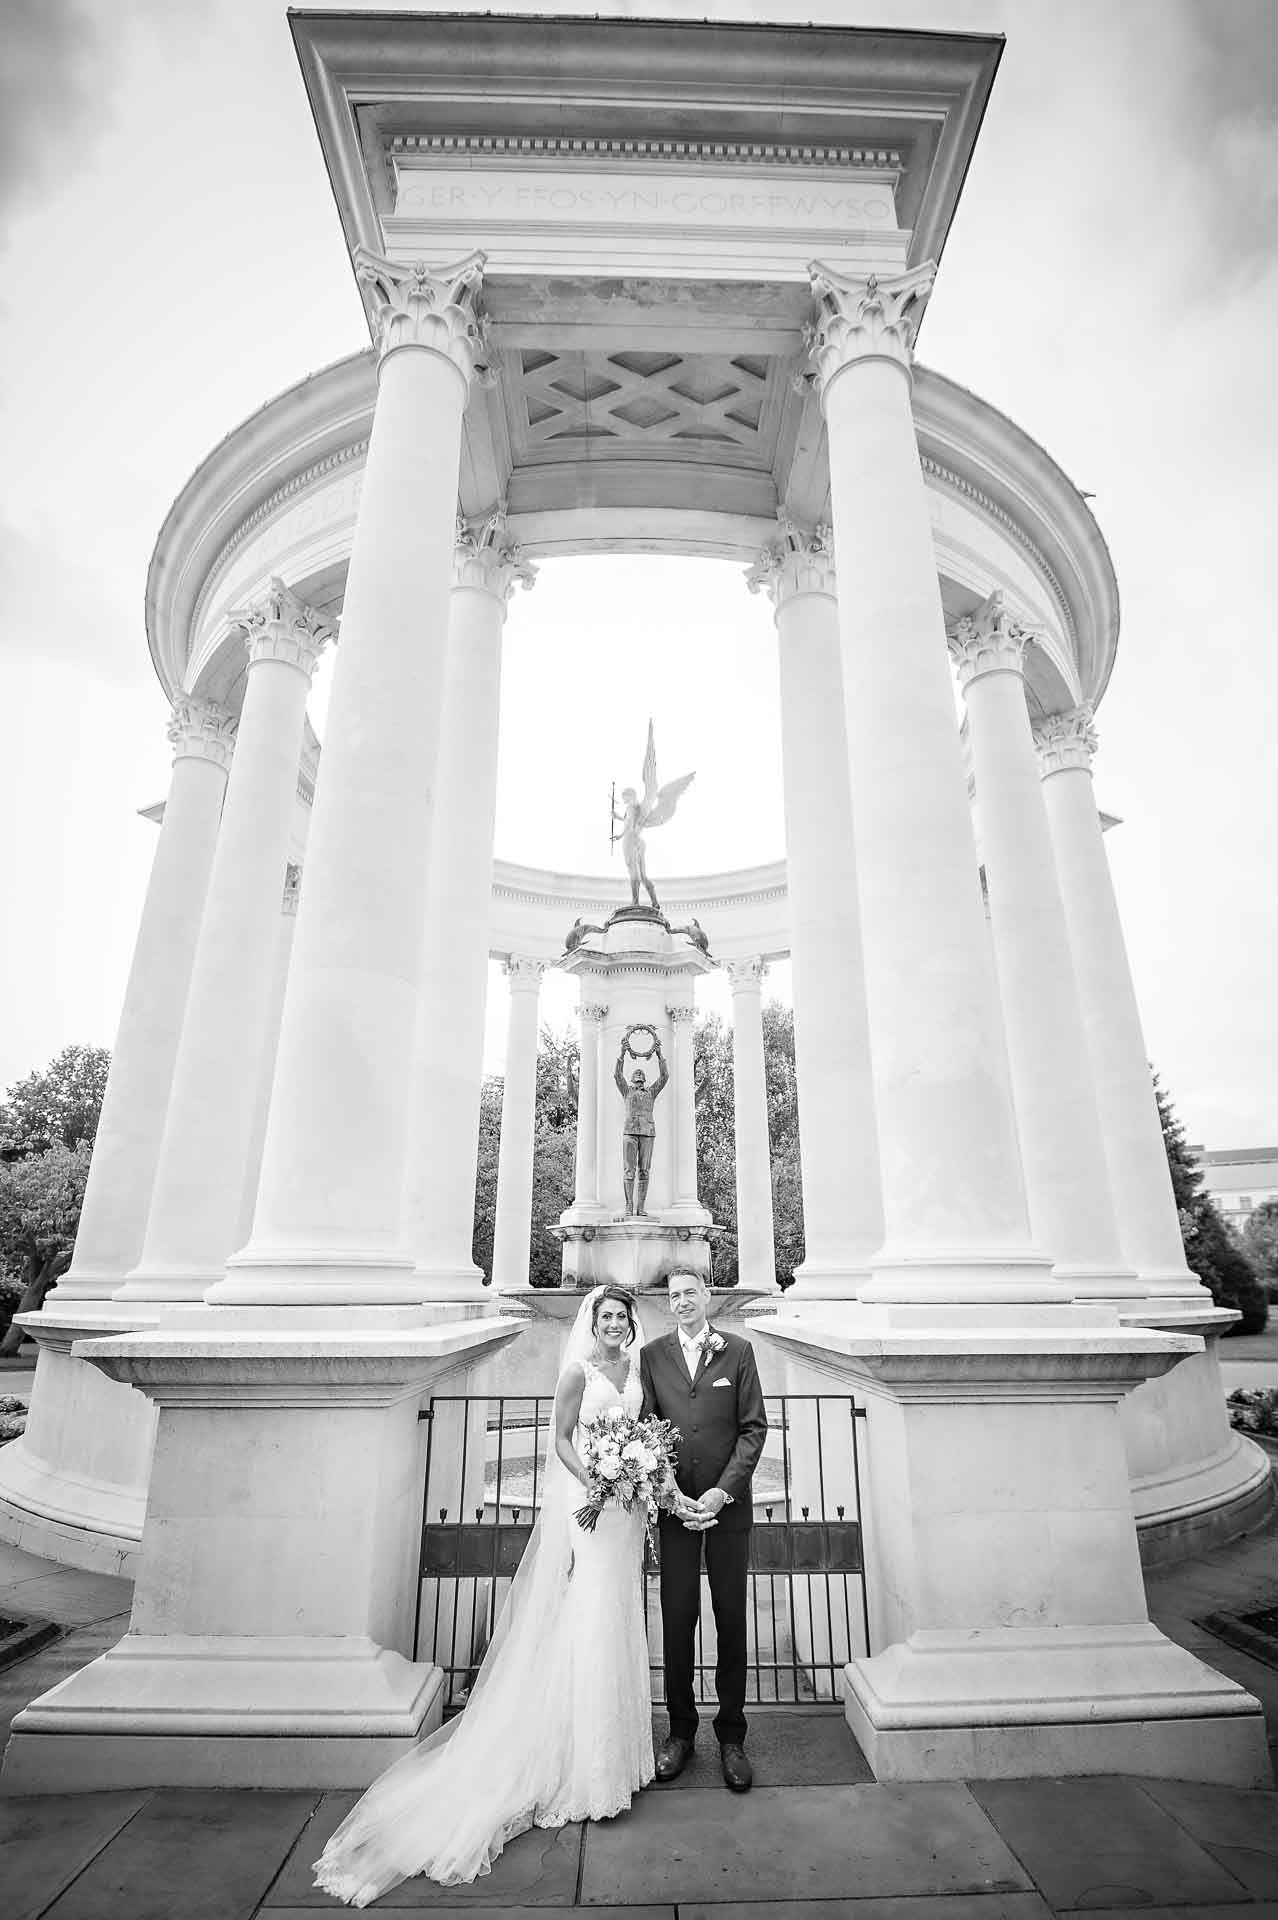 Portrait of bride and groom taken in front of the Welsh National War Memorial in Alexandra Gardens, Cardiff